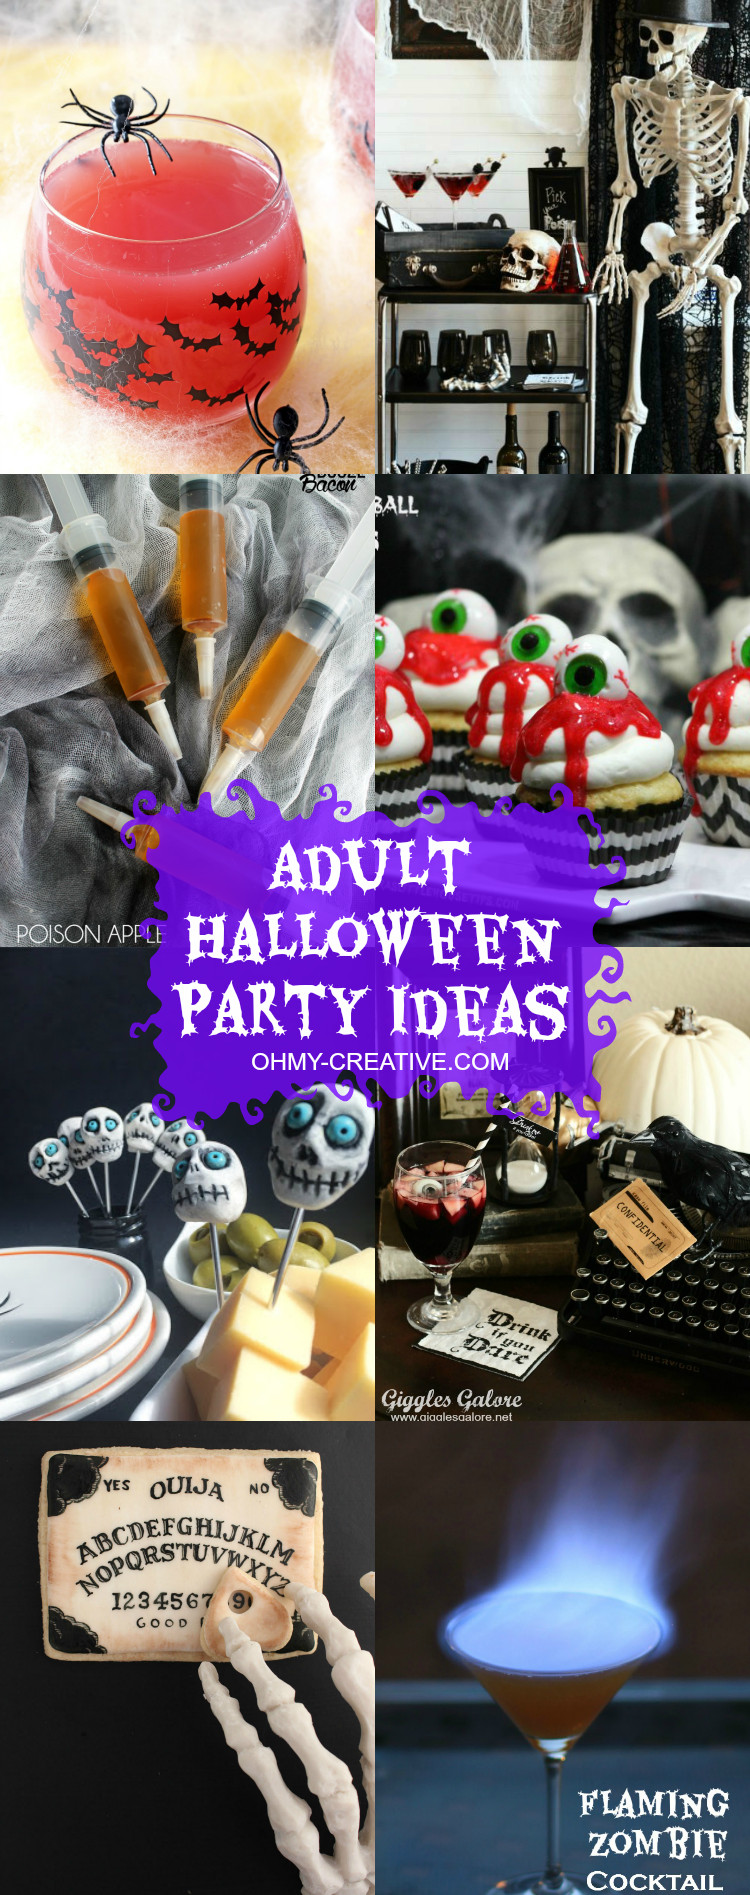 Creative Halloween Party Ideas
 Adult Halloween Party Ideas Oh My Creative